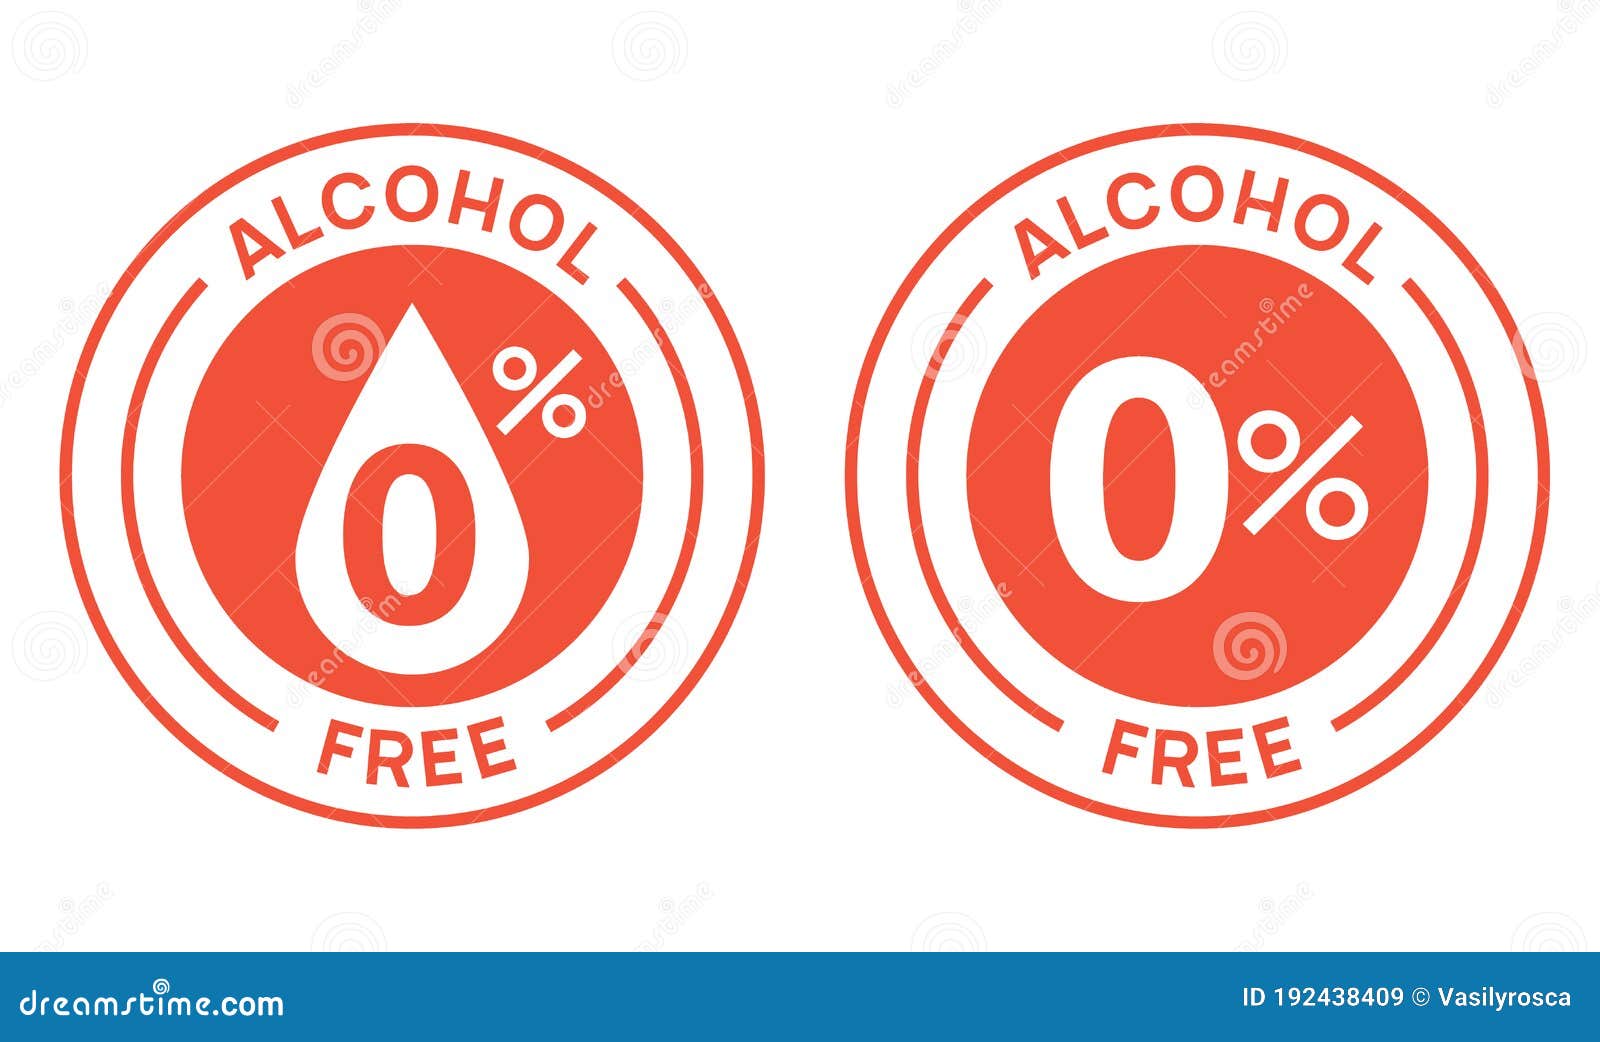 non alcoholic round icon stamp. zero alcohol sign seal. alcohol free emblem mark label